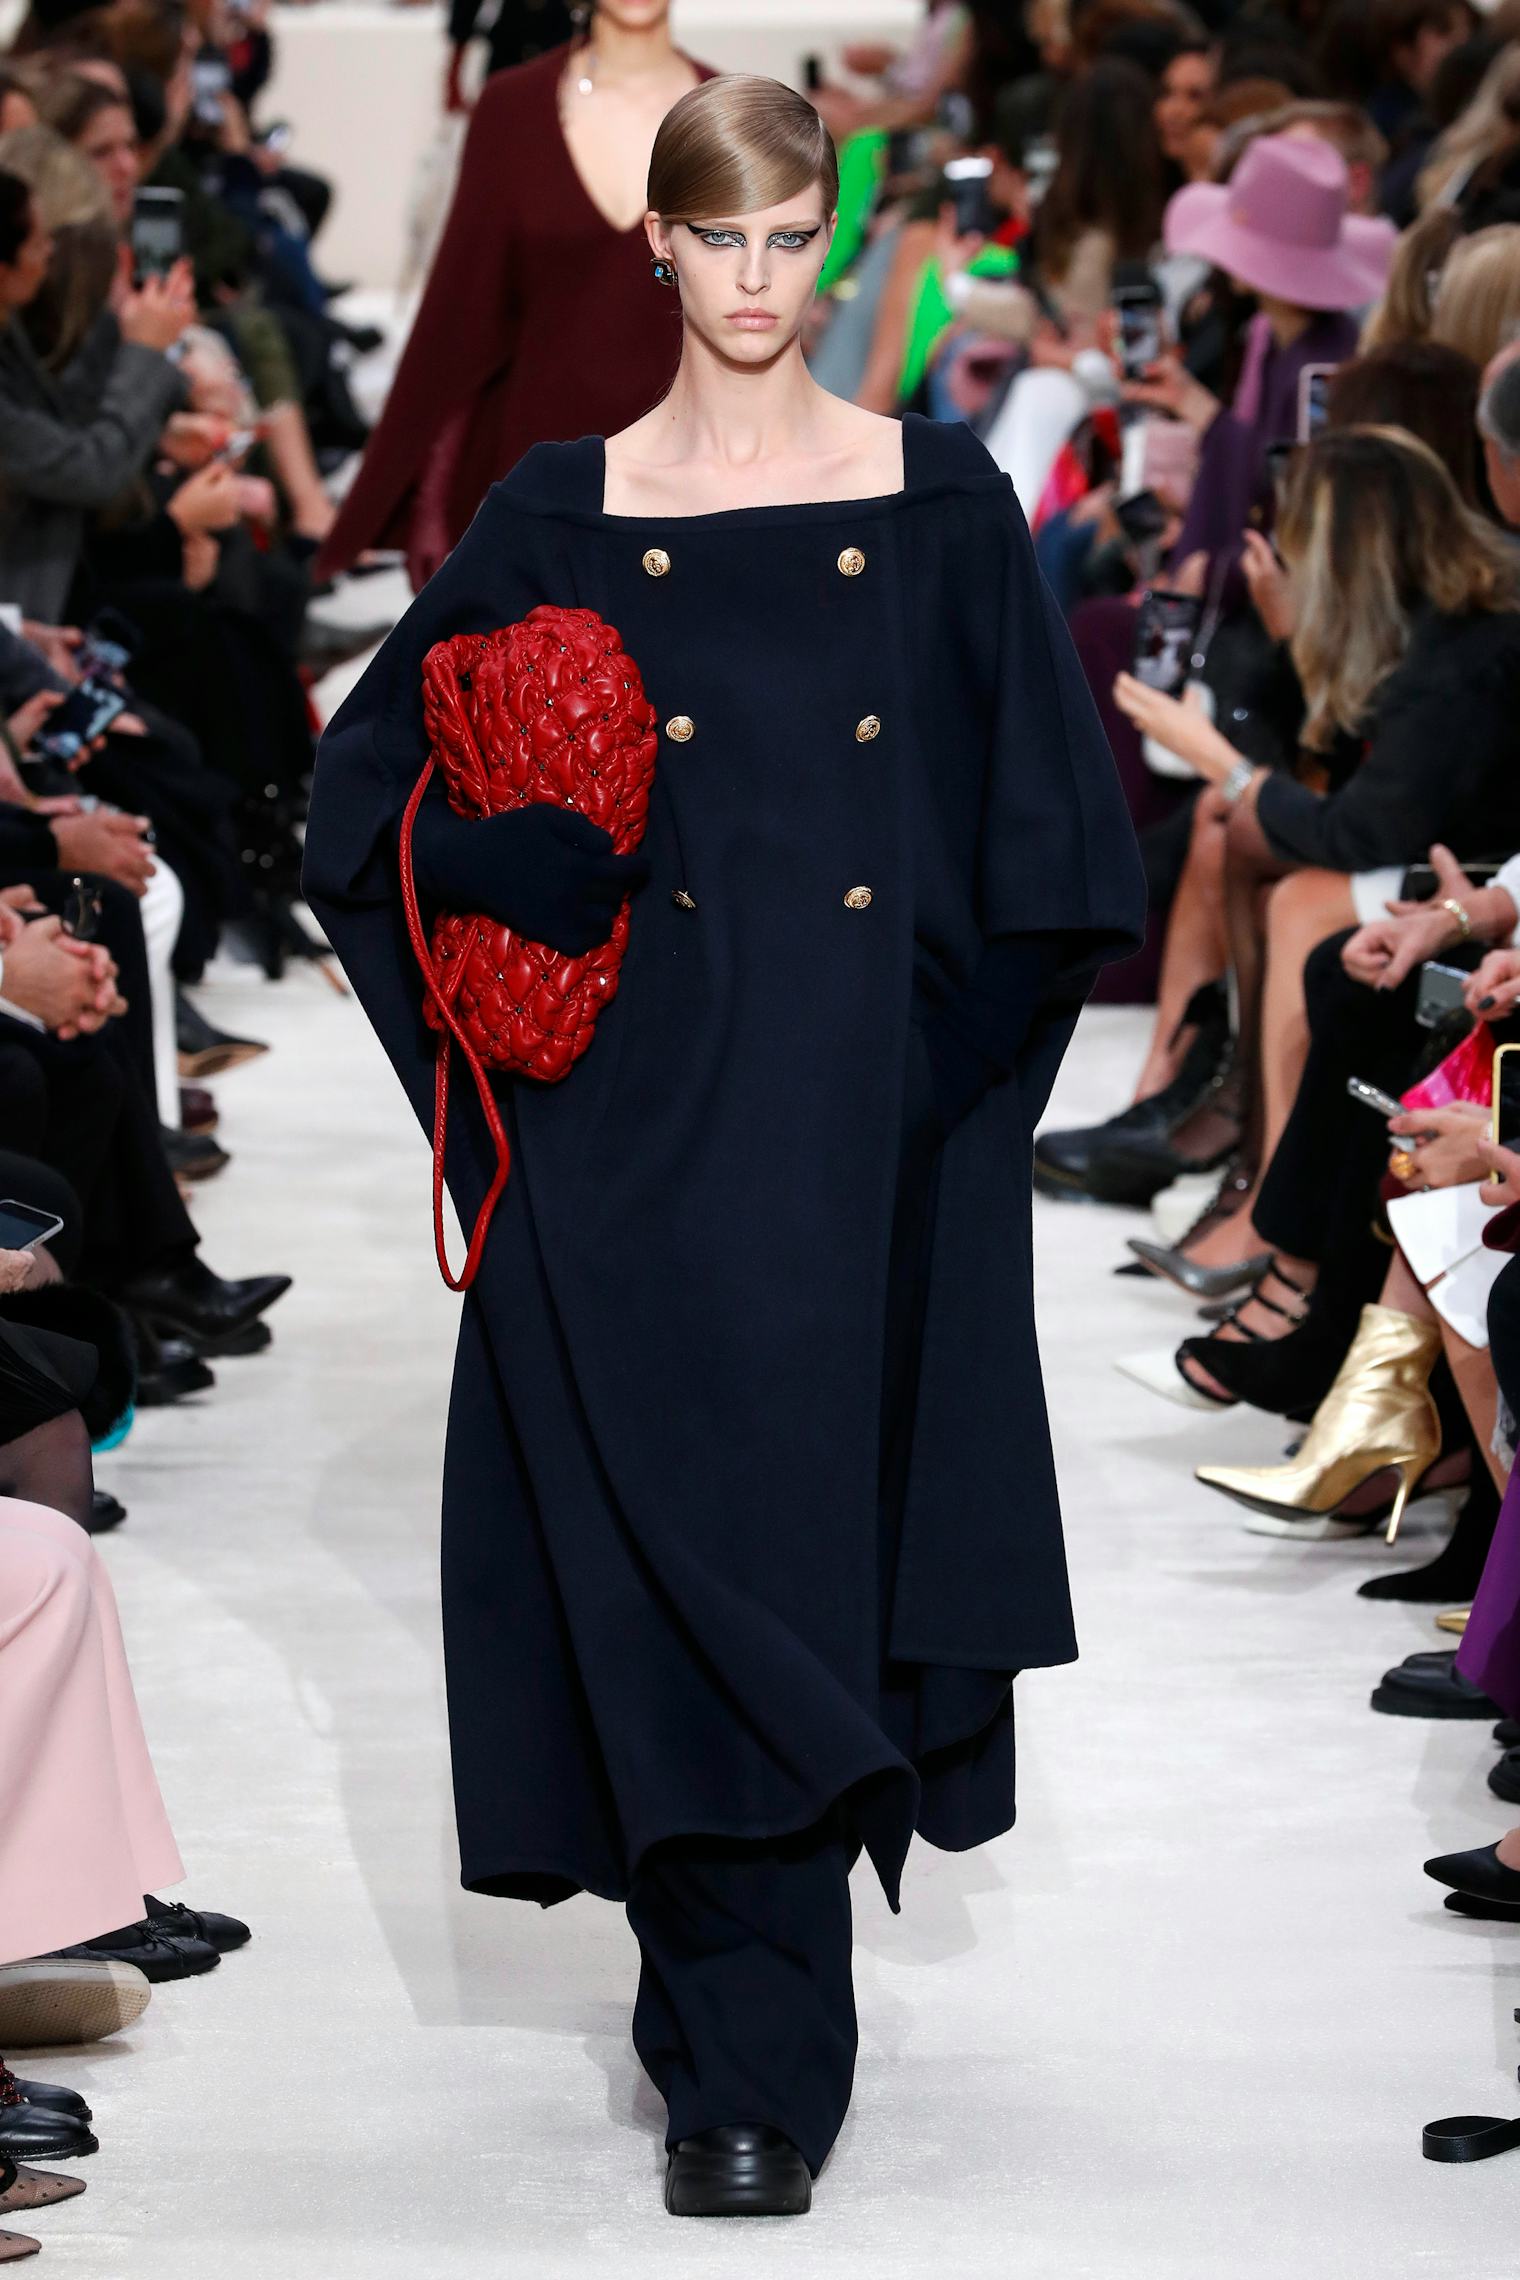 Paris Fashion Week Fall 2020 Trends: Fringe, Statement Collars, & The ...